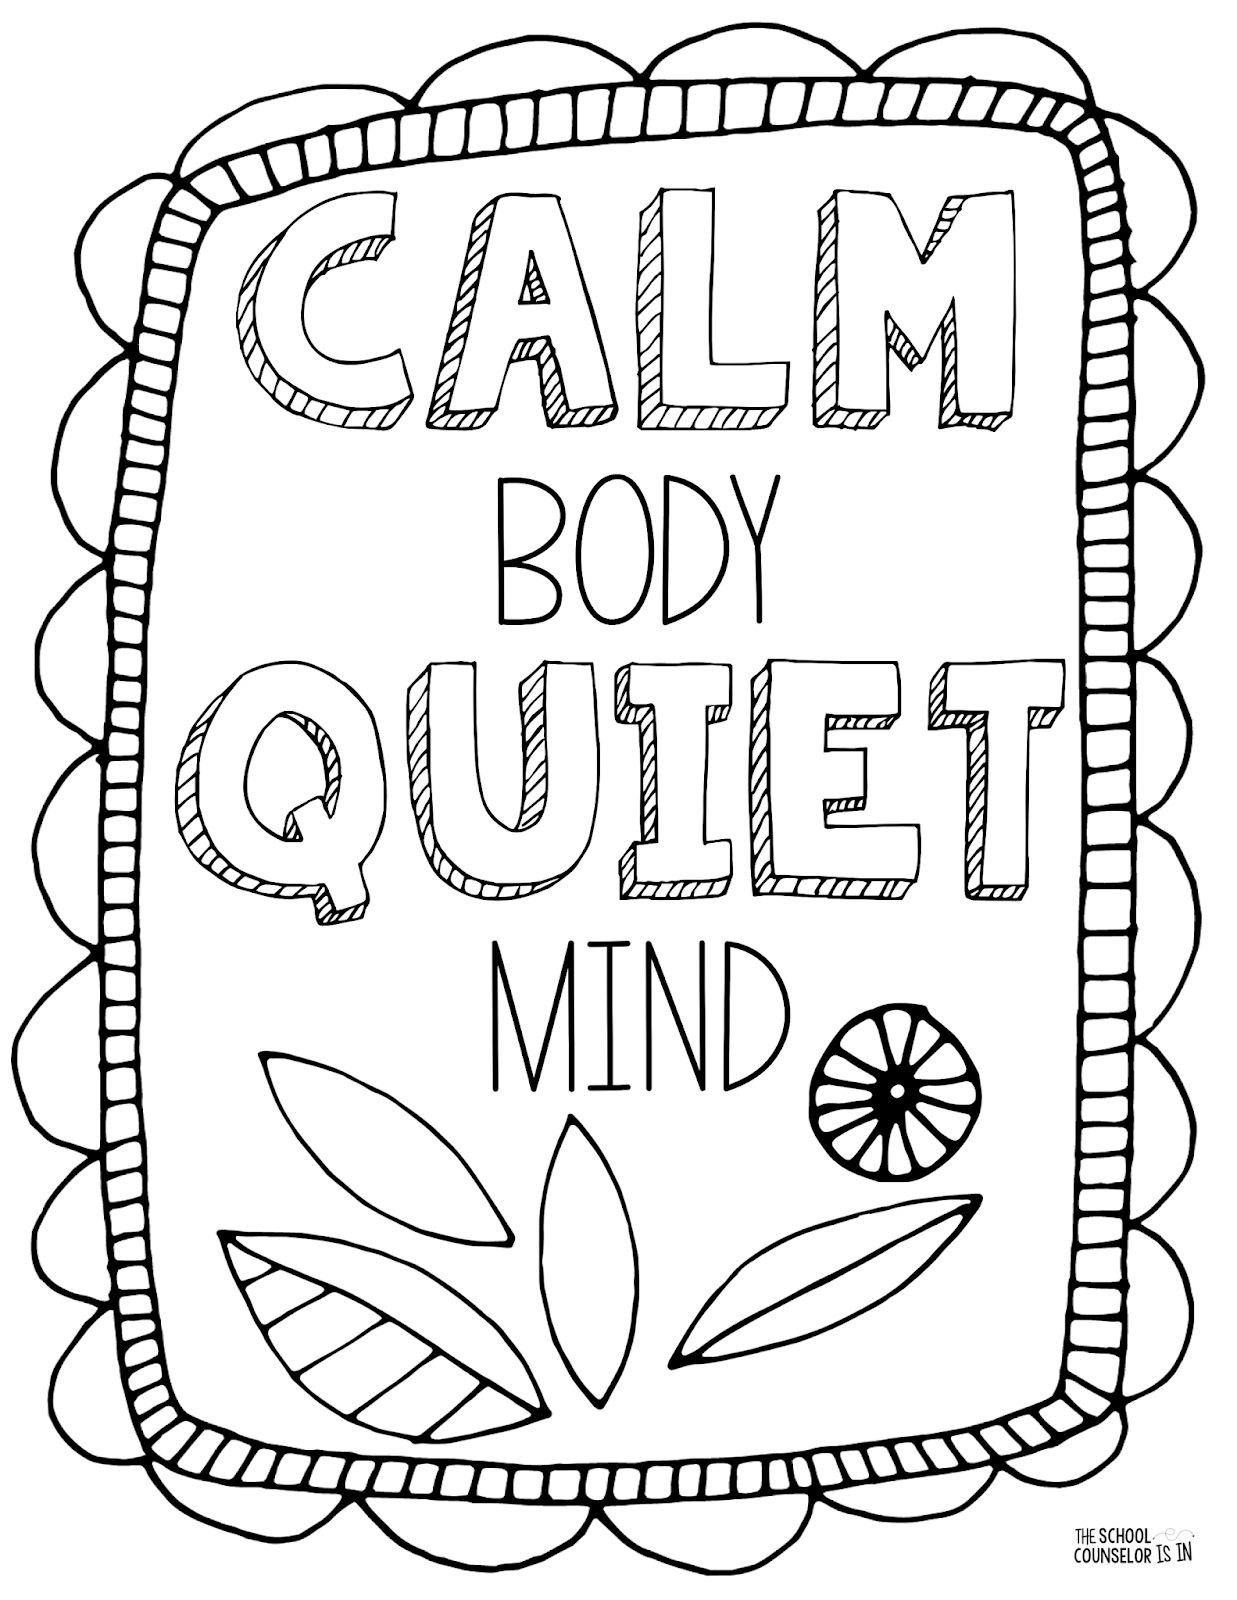 Mindfulness Coloring Sheetstheschoolcounselorisin.blogspot.com